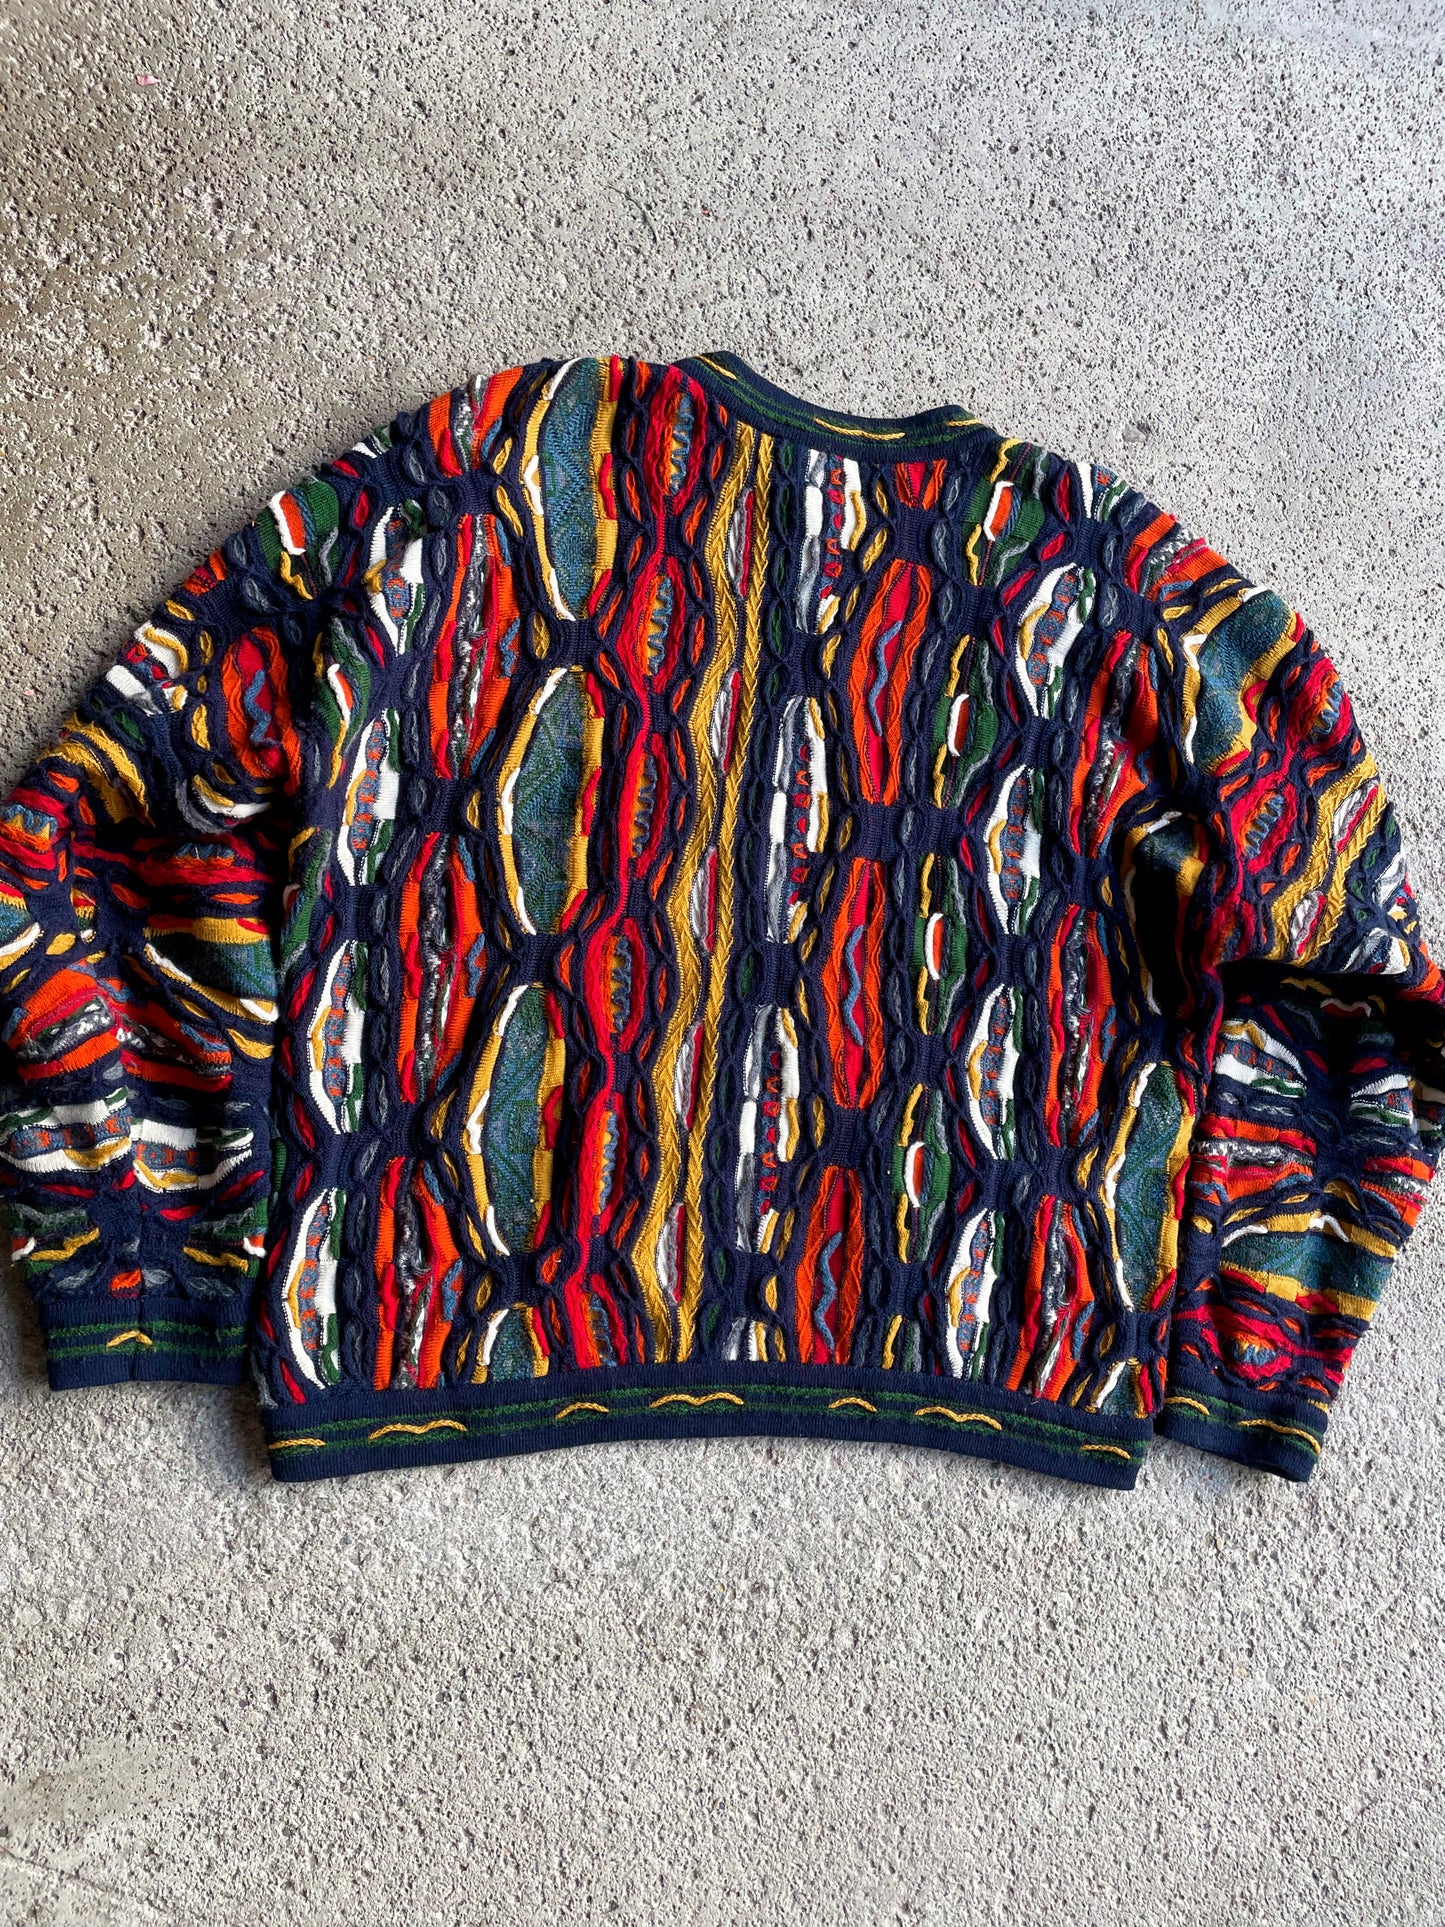 Authentic Coogi Sweater